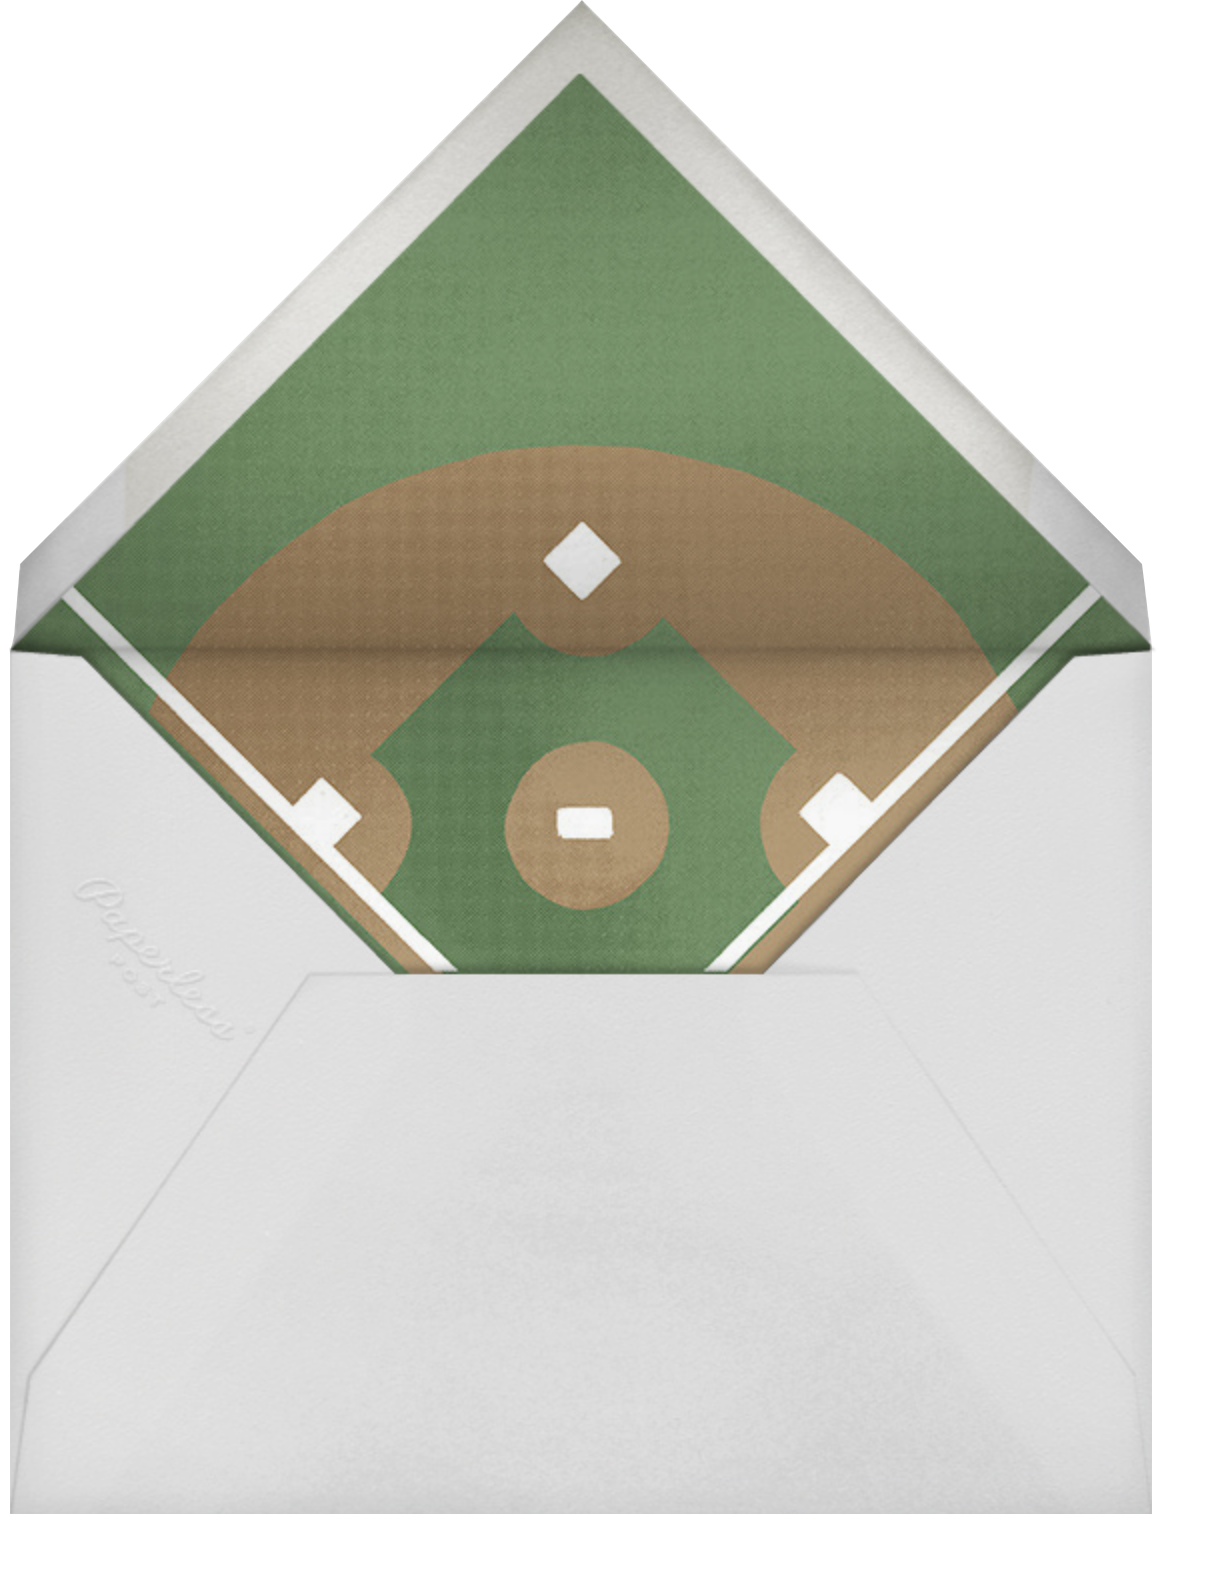 Courtside Seats - Baseball - Paperless Post - Envelope